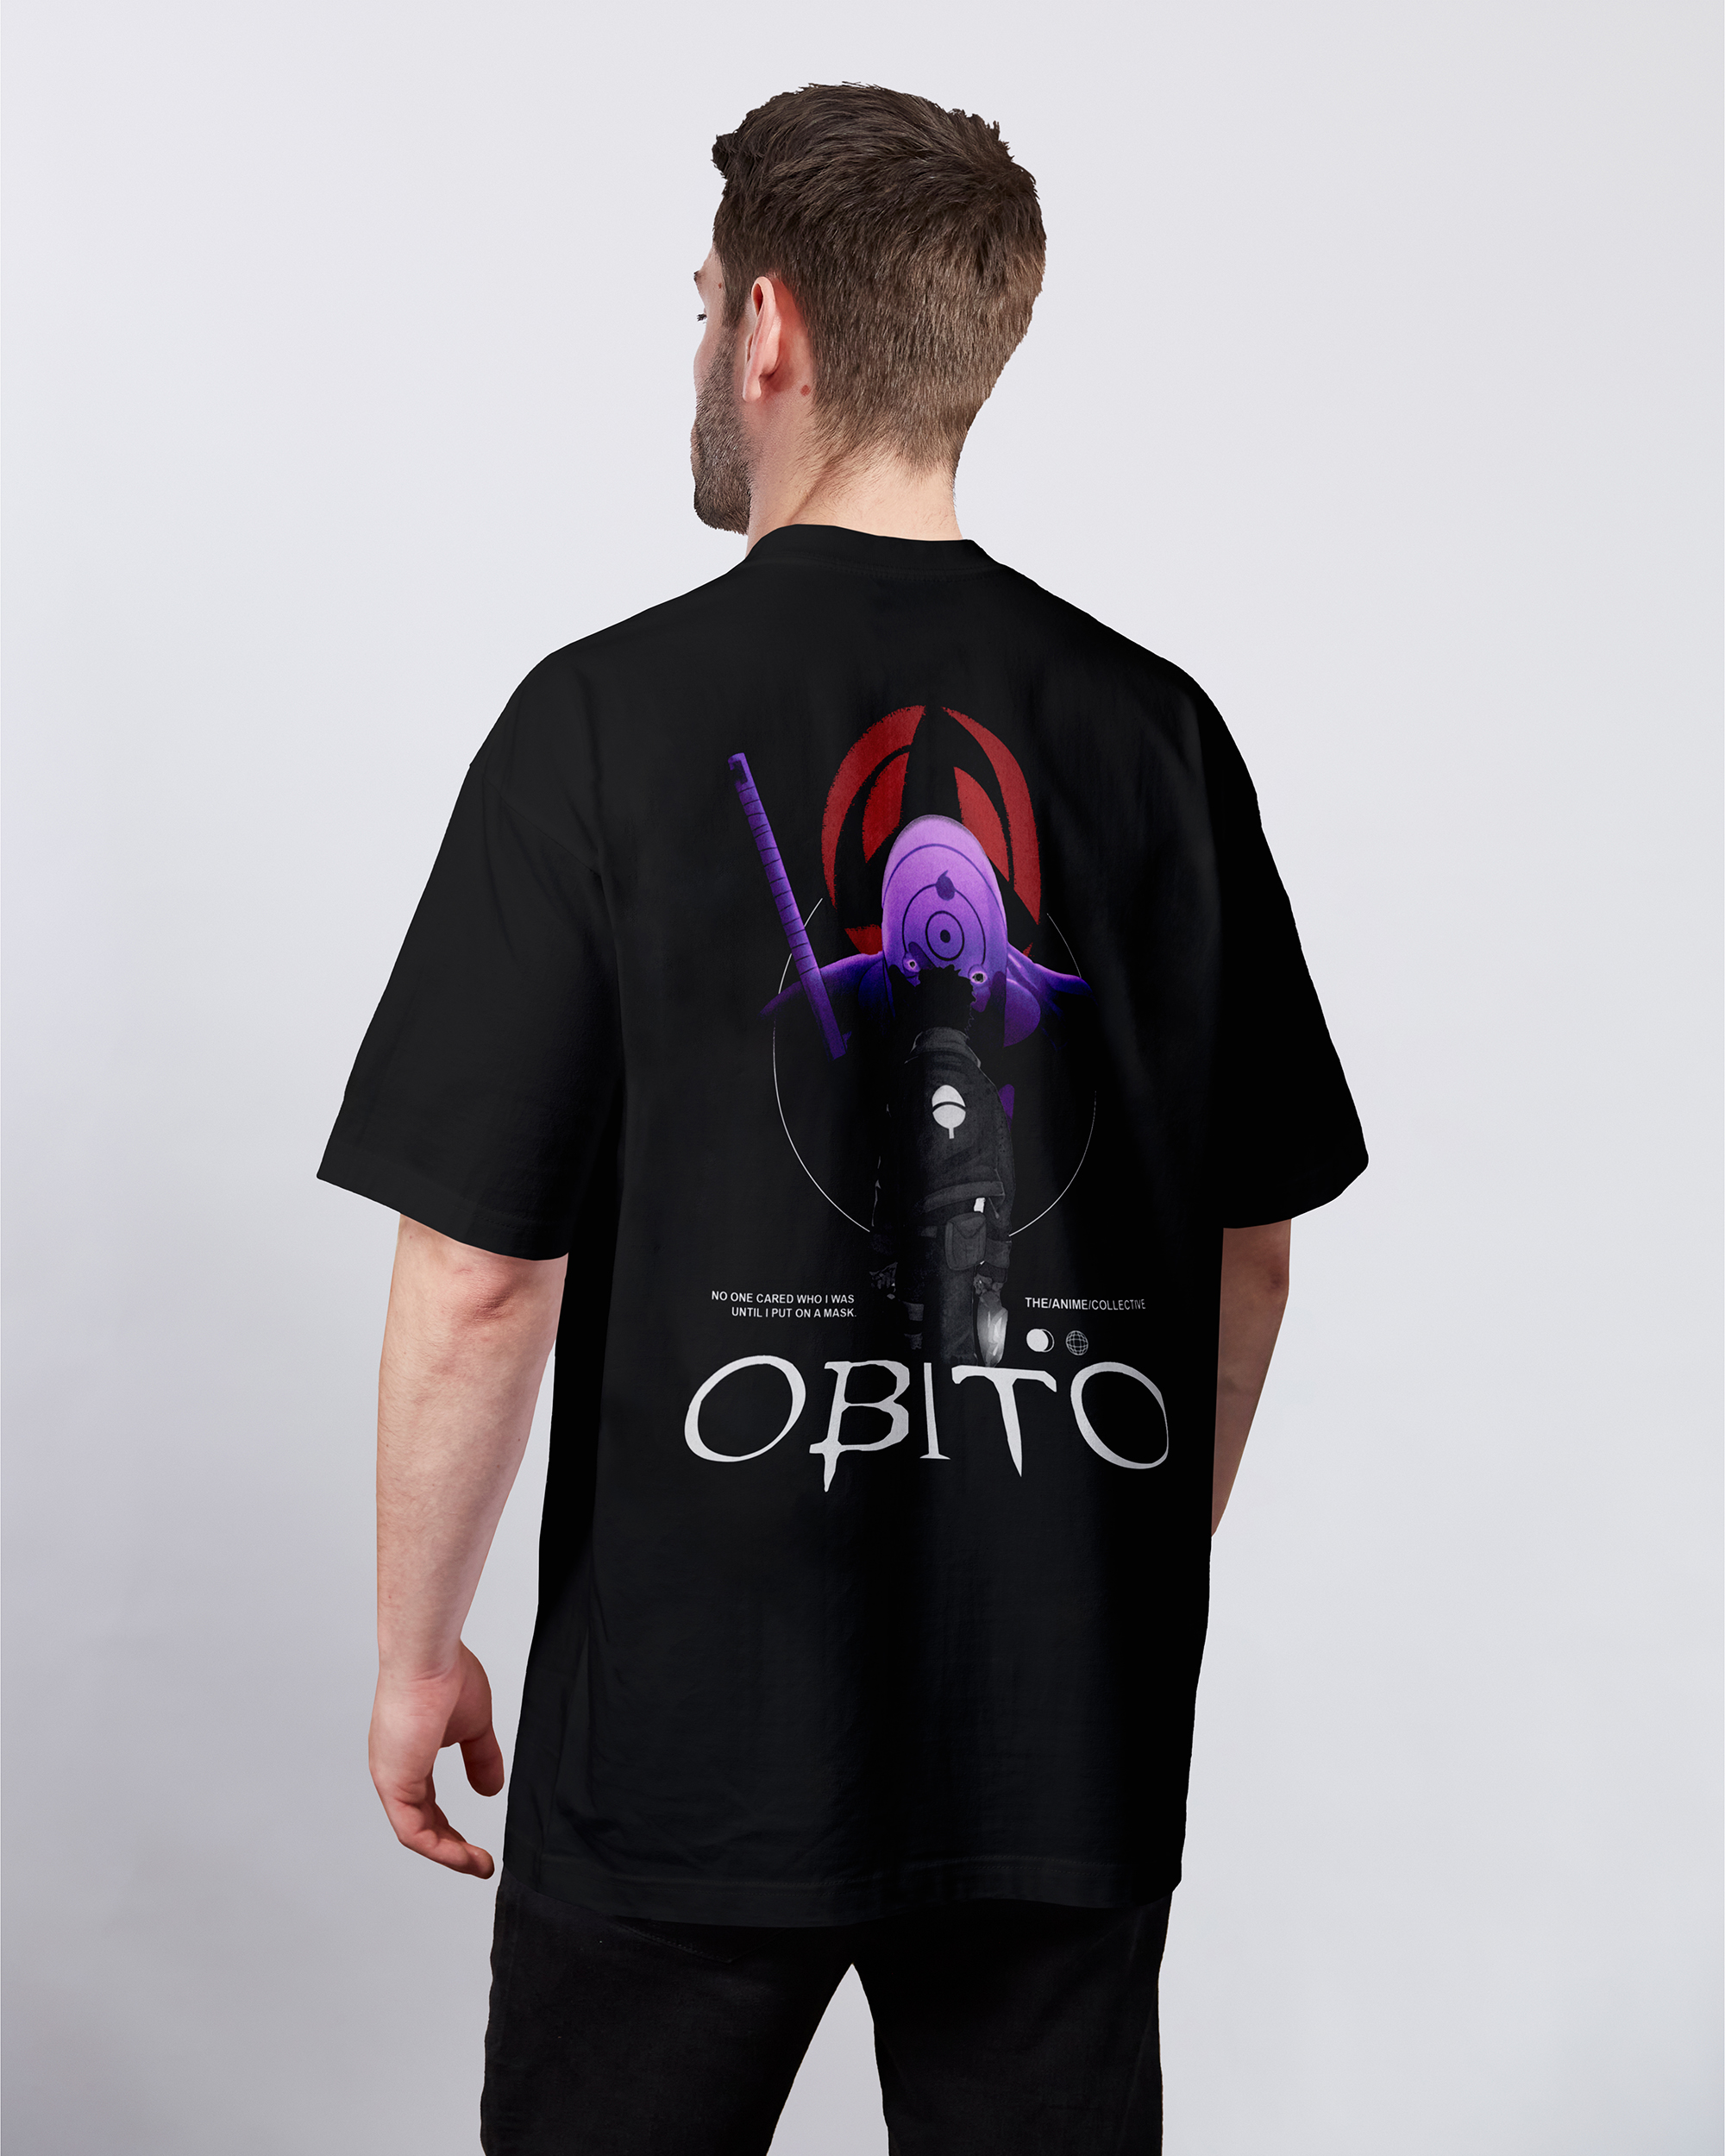 Uchiha Obito "Cursed" T-Shirt | Naruto Shippuden